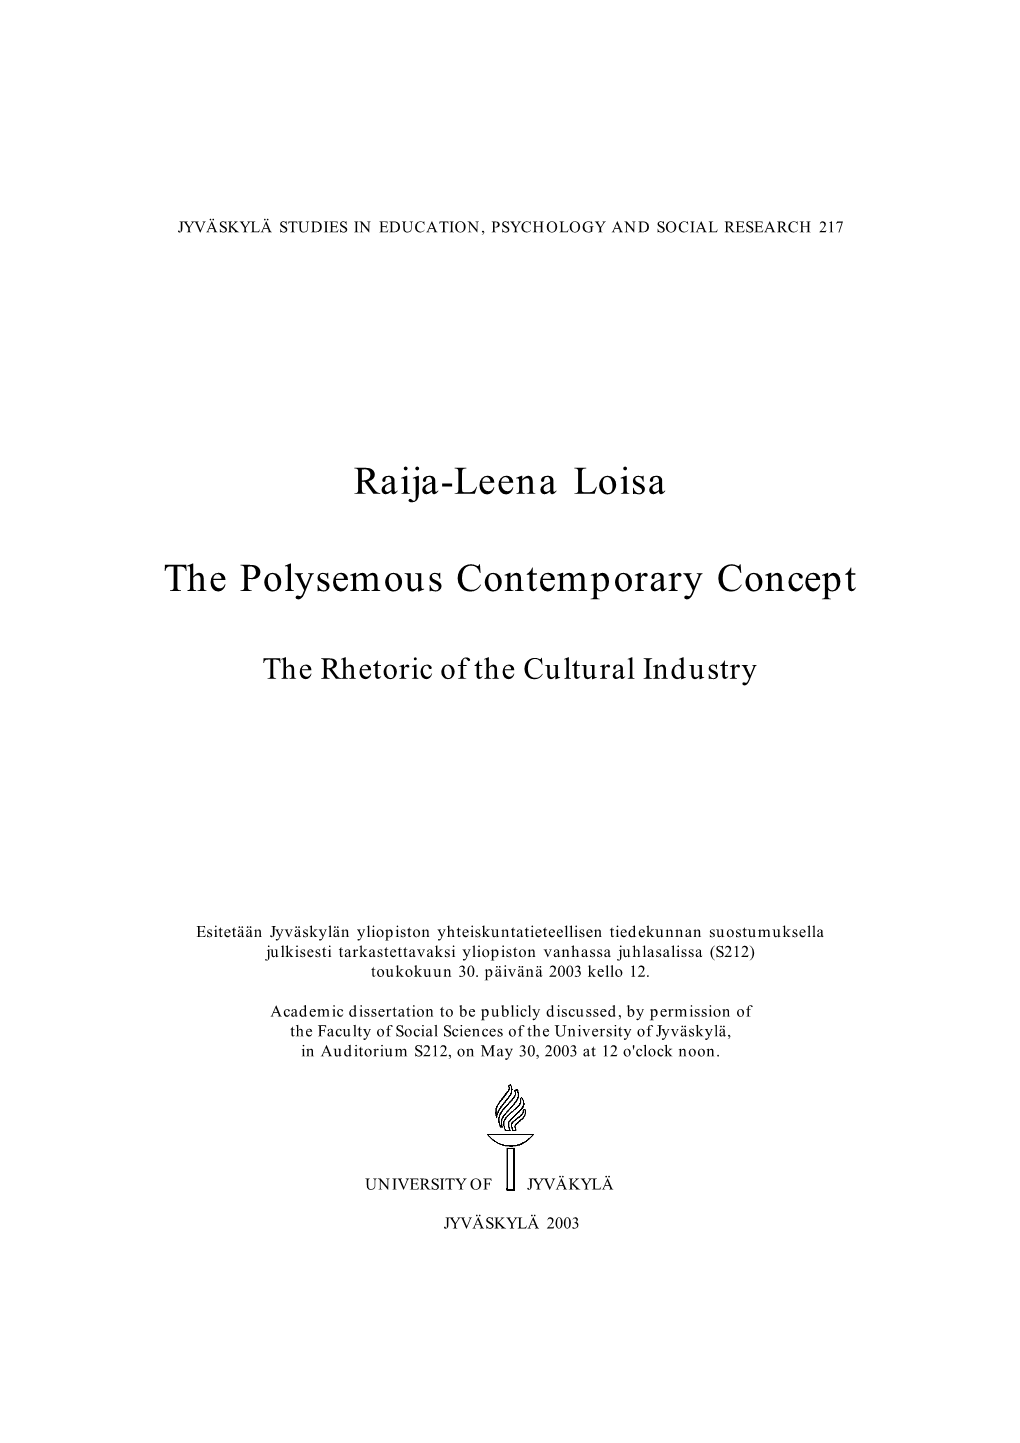 Raija-Leena Loisa the Polysemous Contemporary Concept